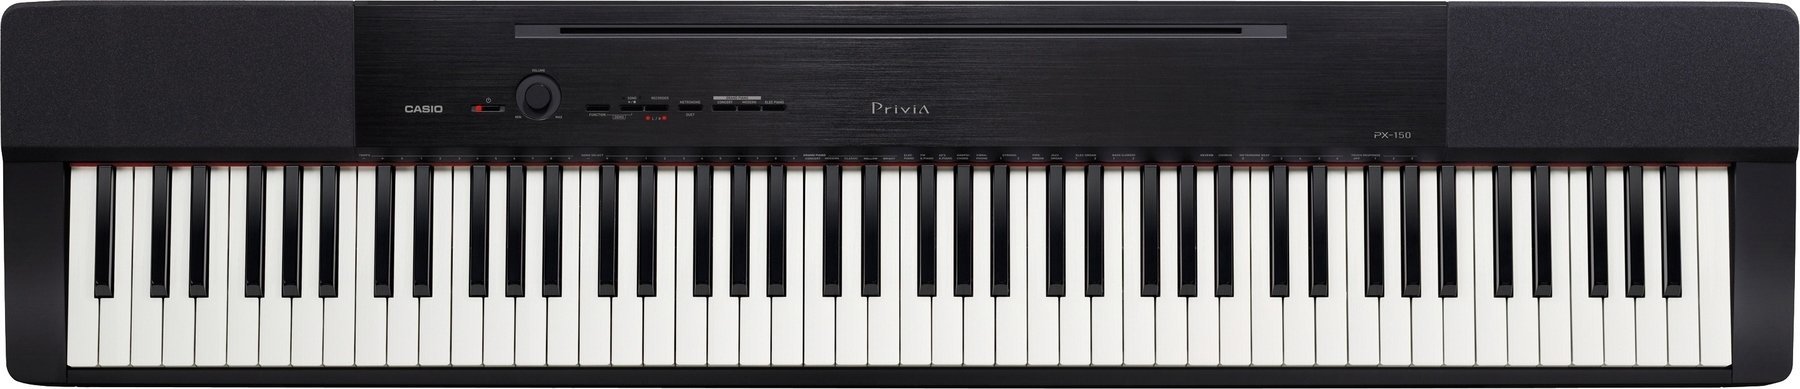 Digitálne stage piano Casio PX150 BK Privia